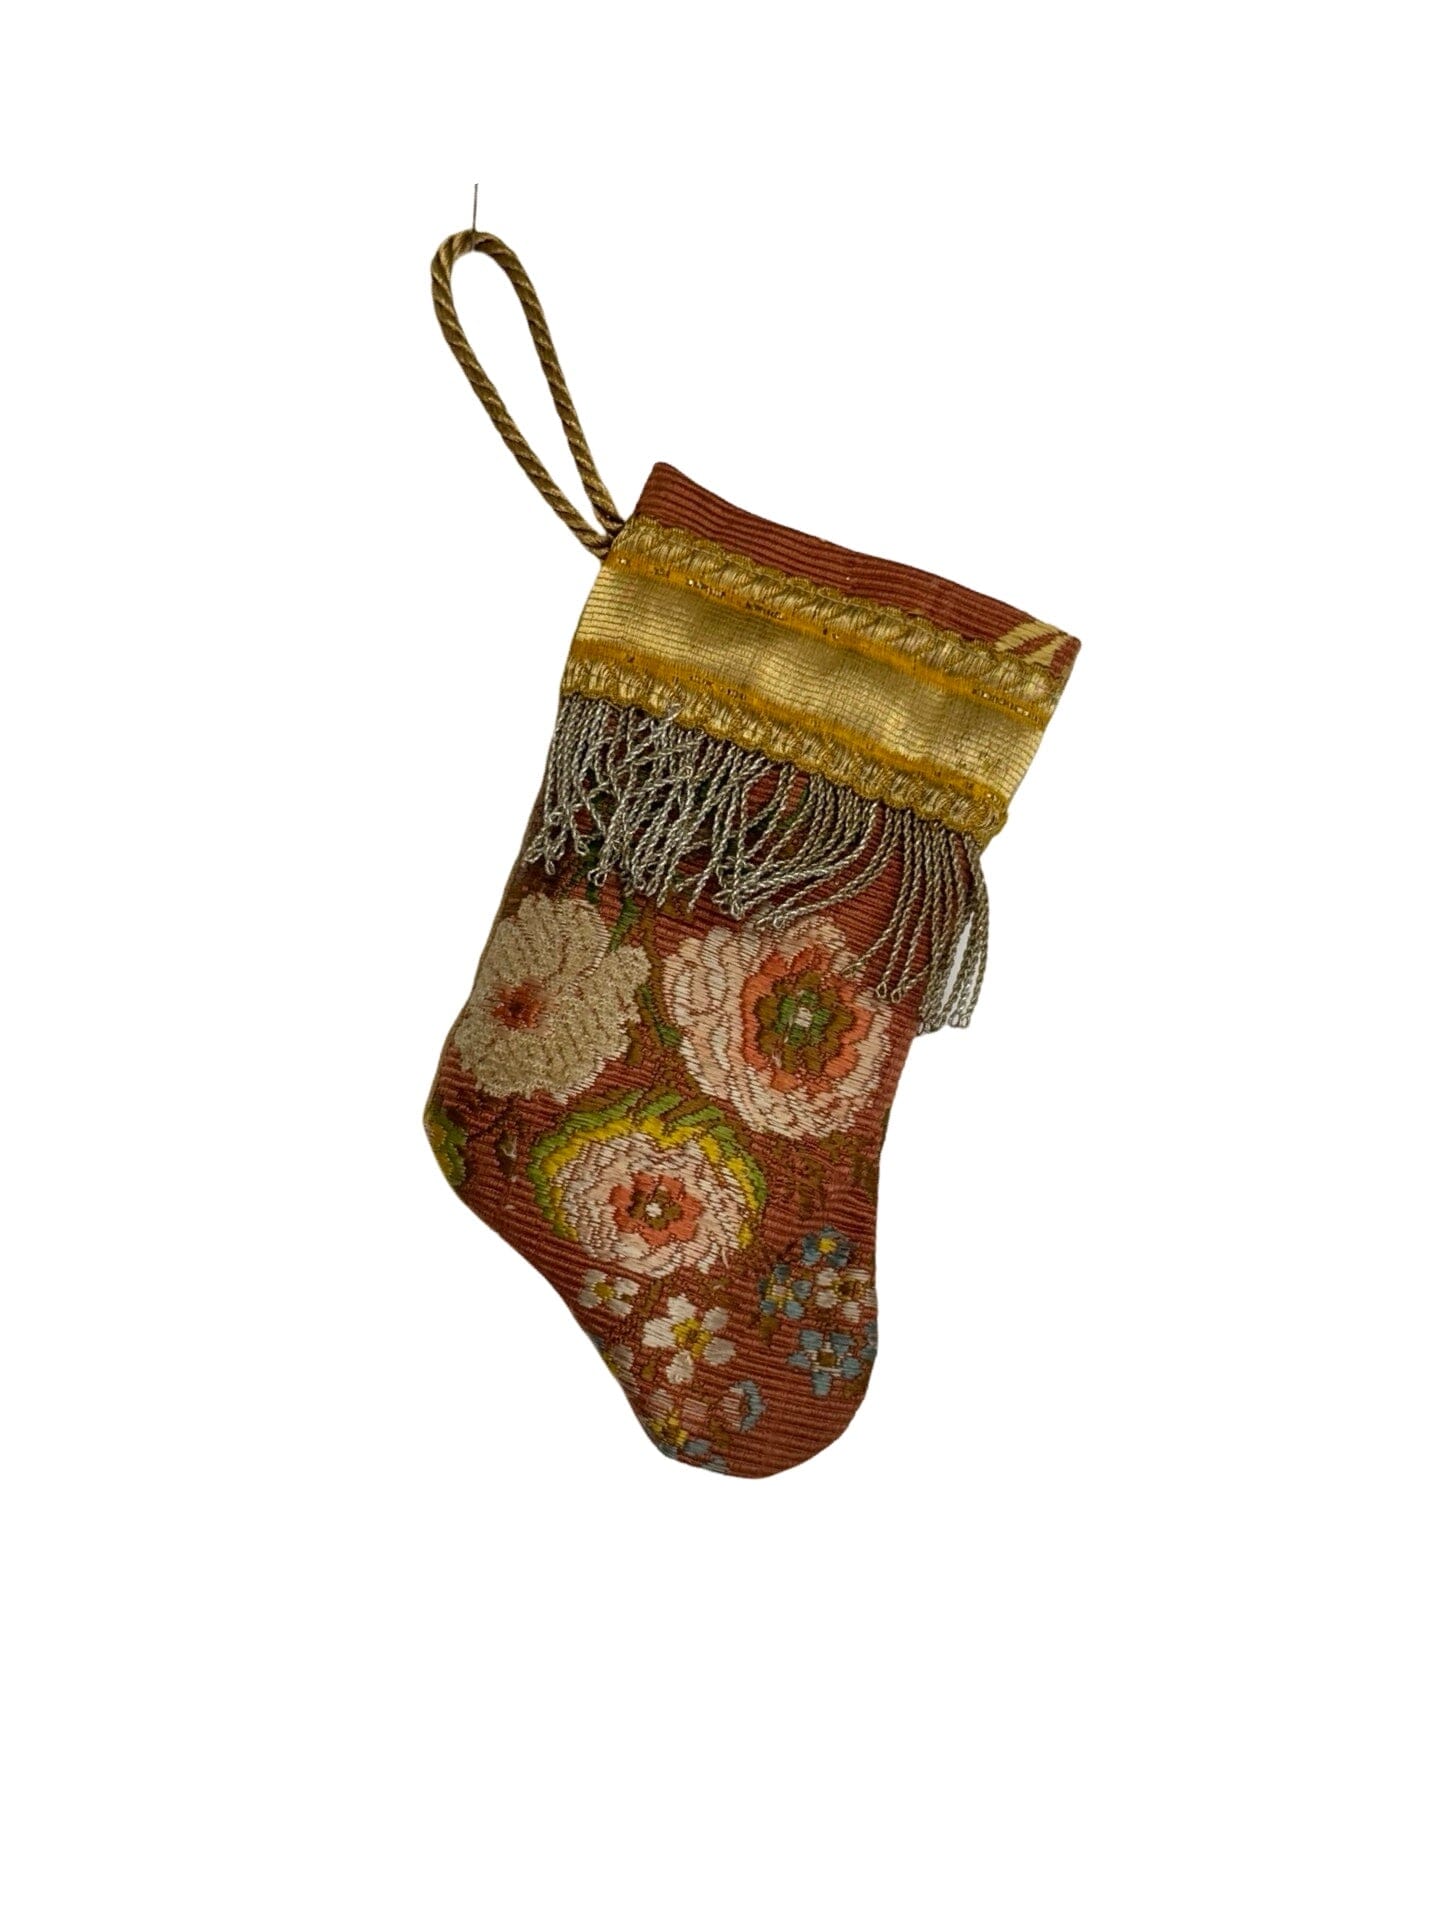 Handmade Mini Stocking Made From Vintage Fabric and Trims- Bronze Rose Floral Ornament B. Viz Design J 